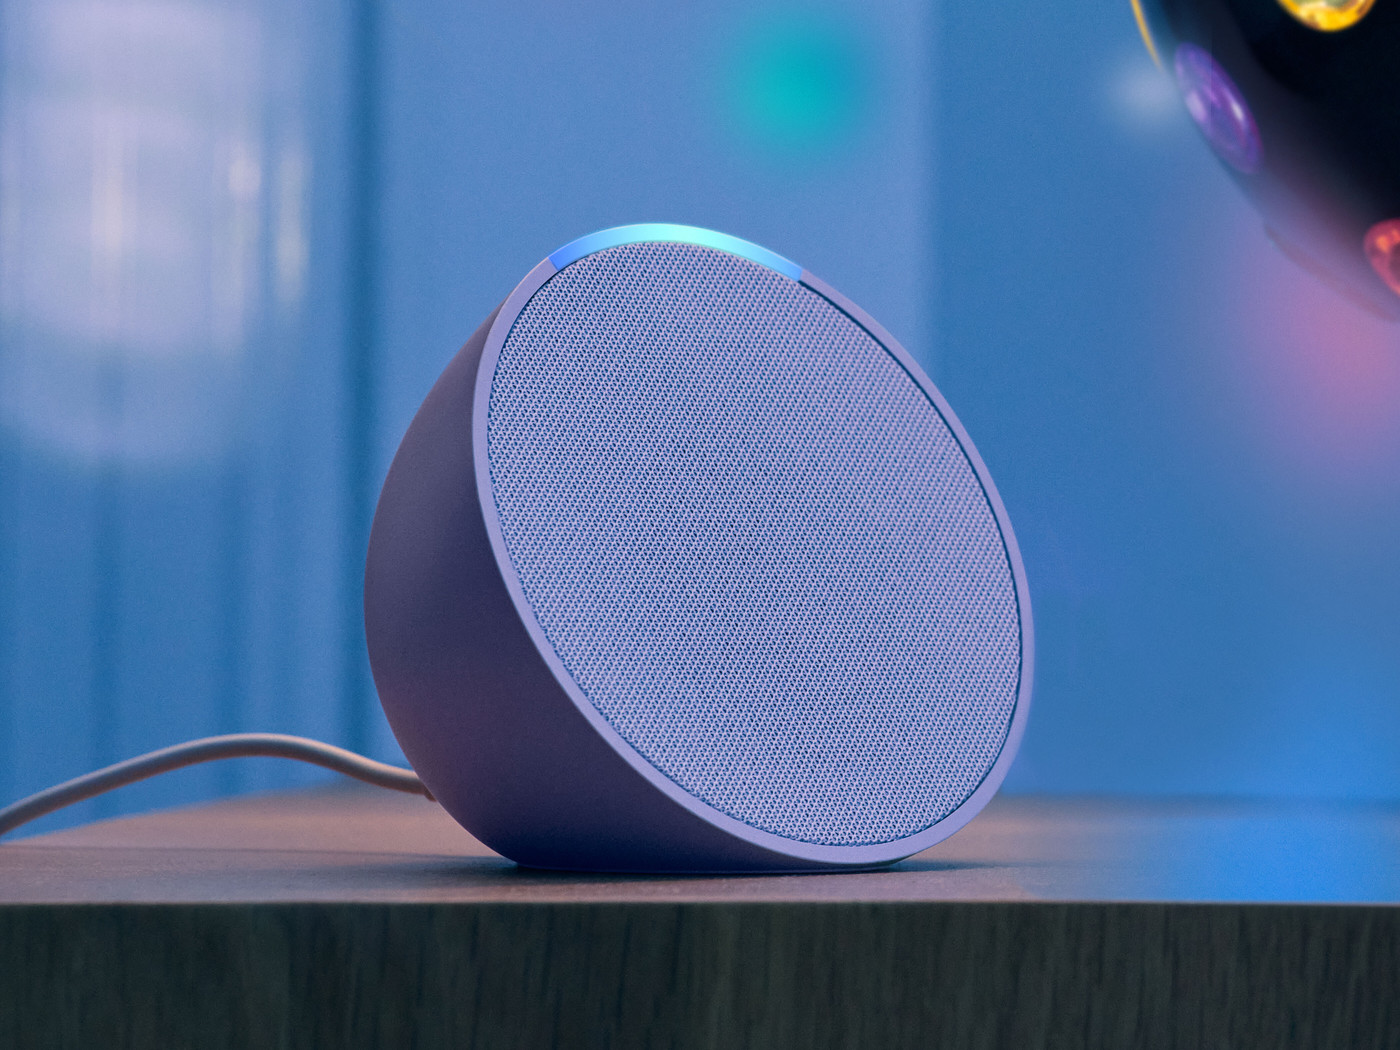 Amazon Echo Pop smart speaker with Alexa support goes on sale